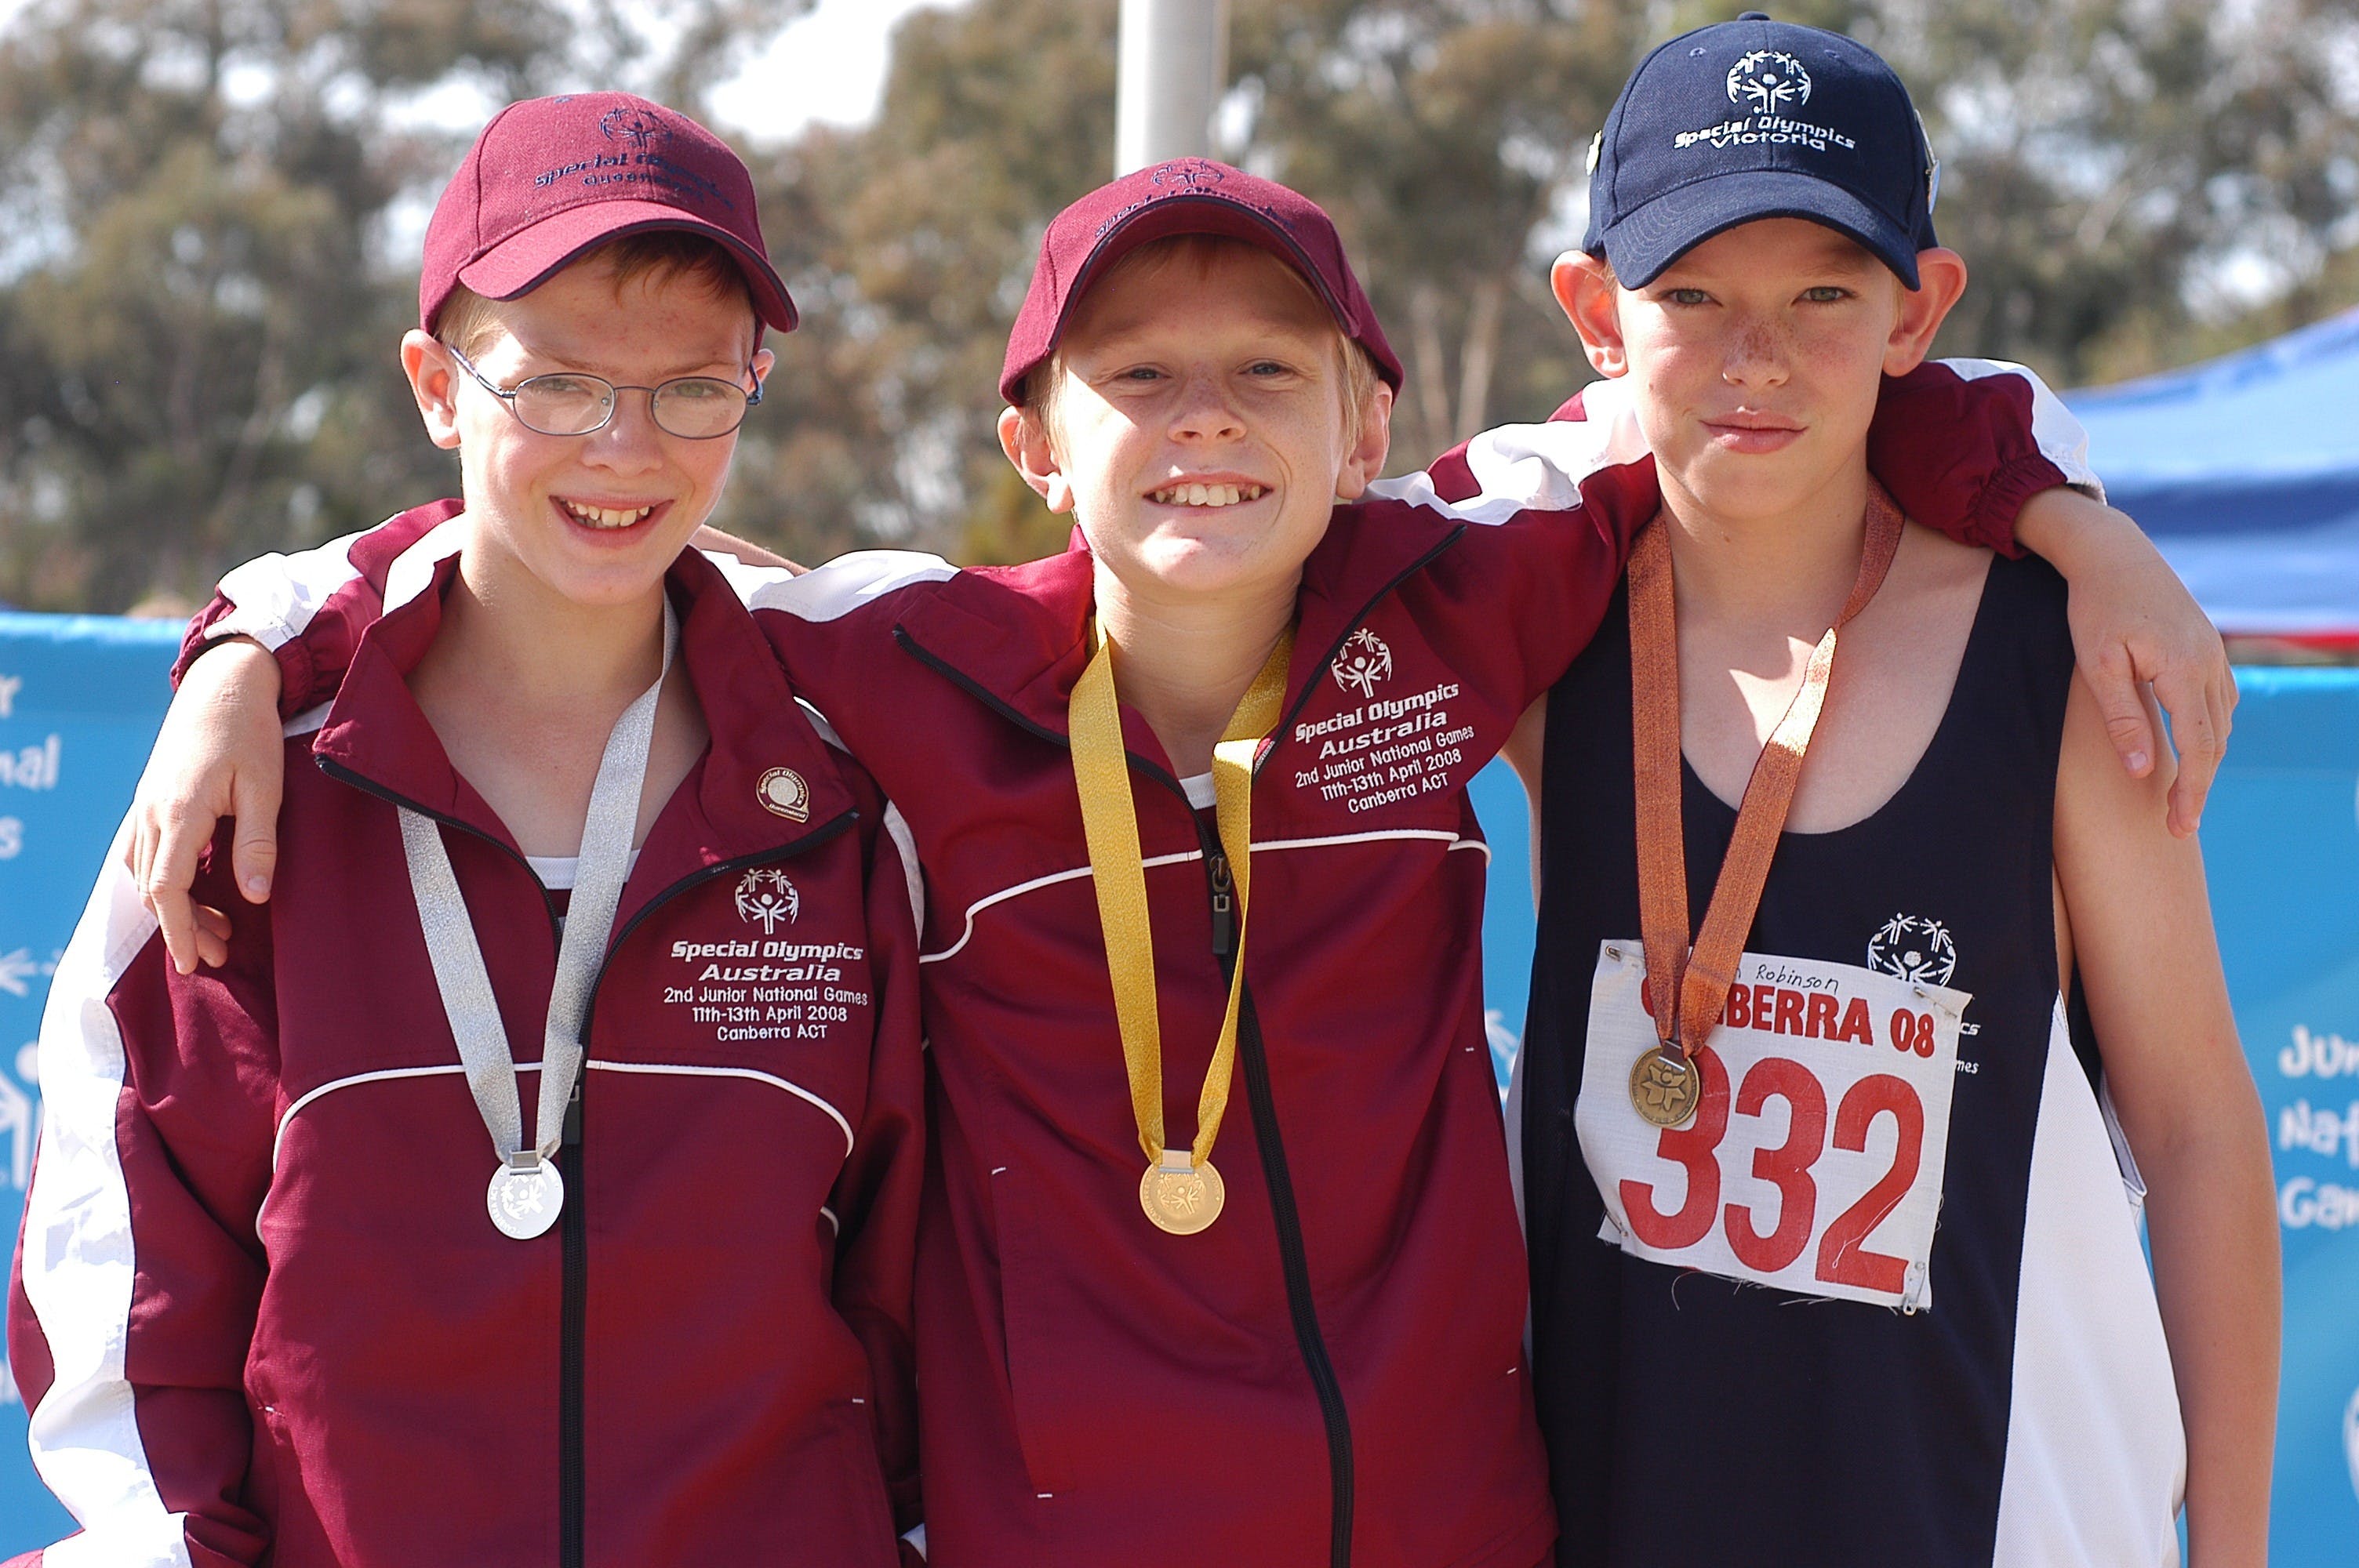 Special Olympics Australia Junior National Games 2021 - St Kilda Accommodation